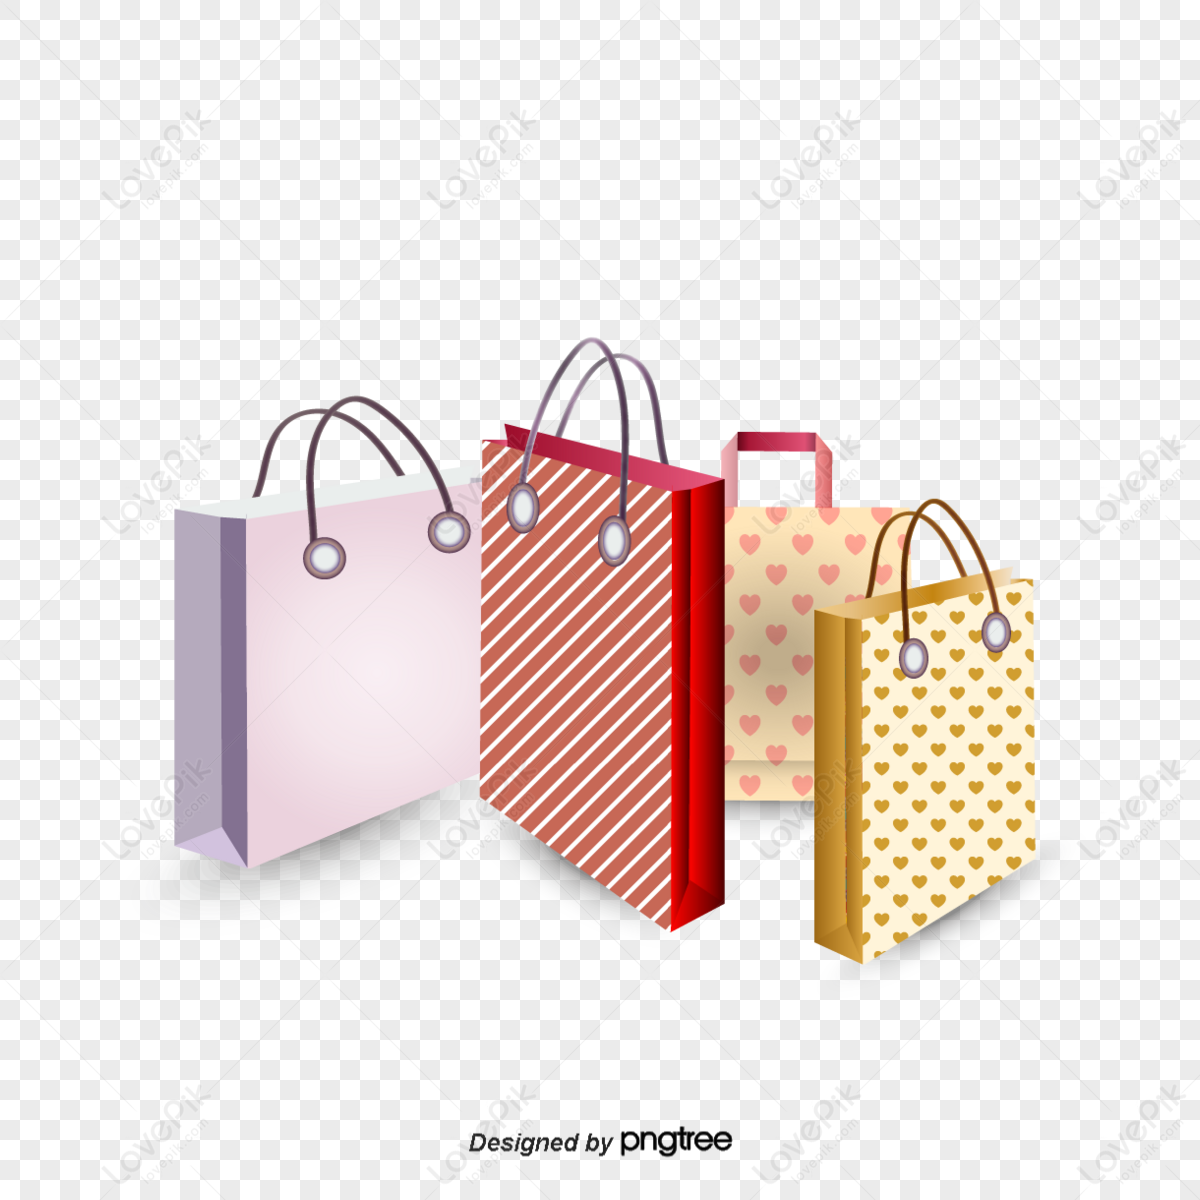 vector paper bag logo culture,packaging,company culture,promotion png transparent background